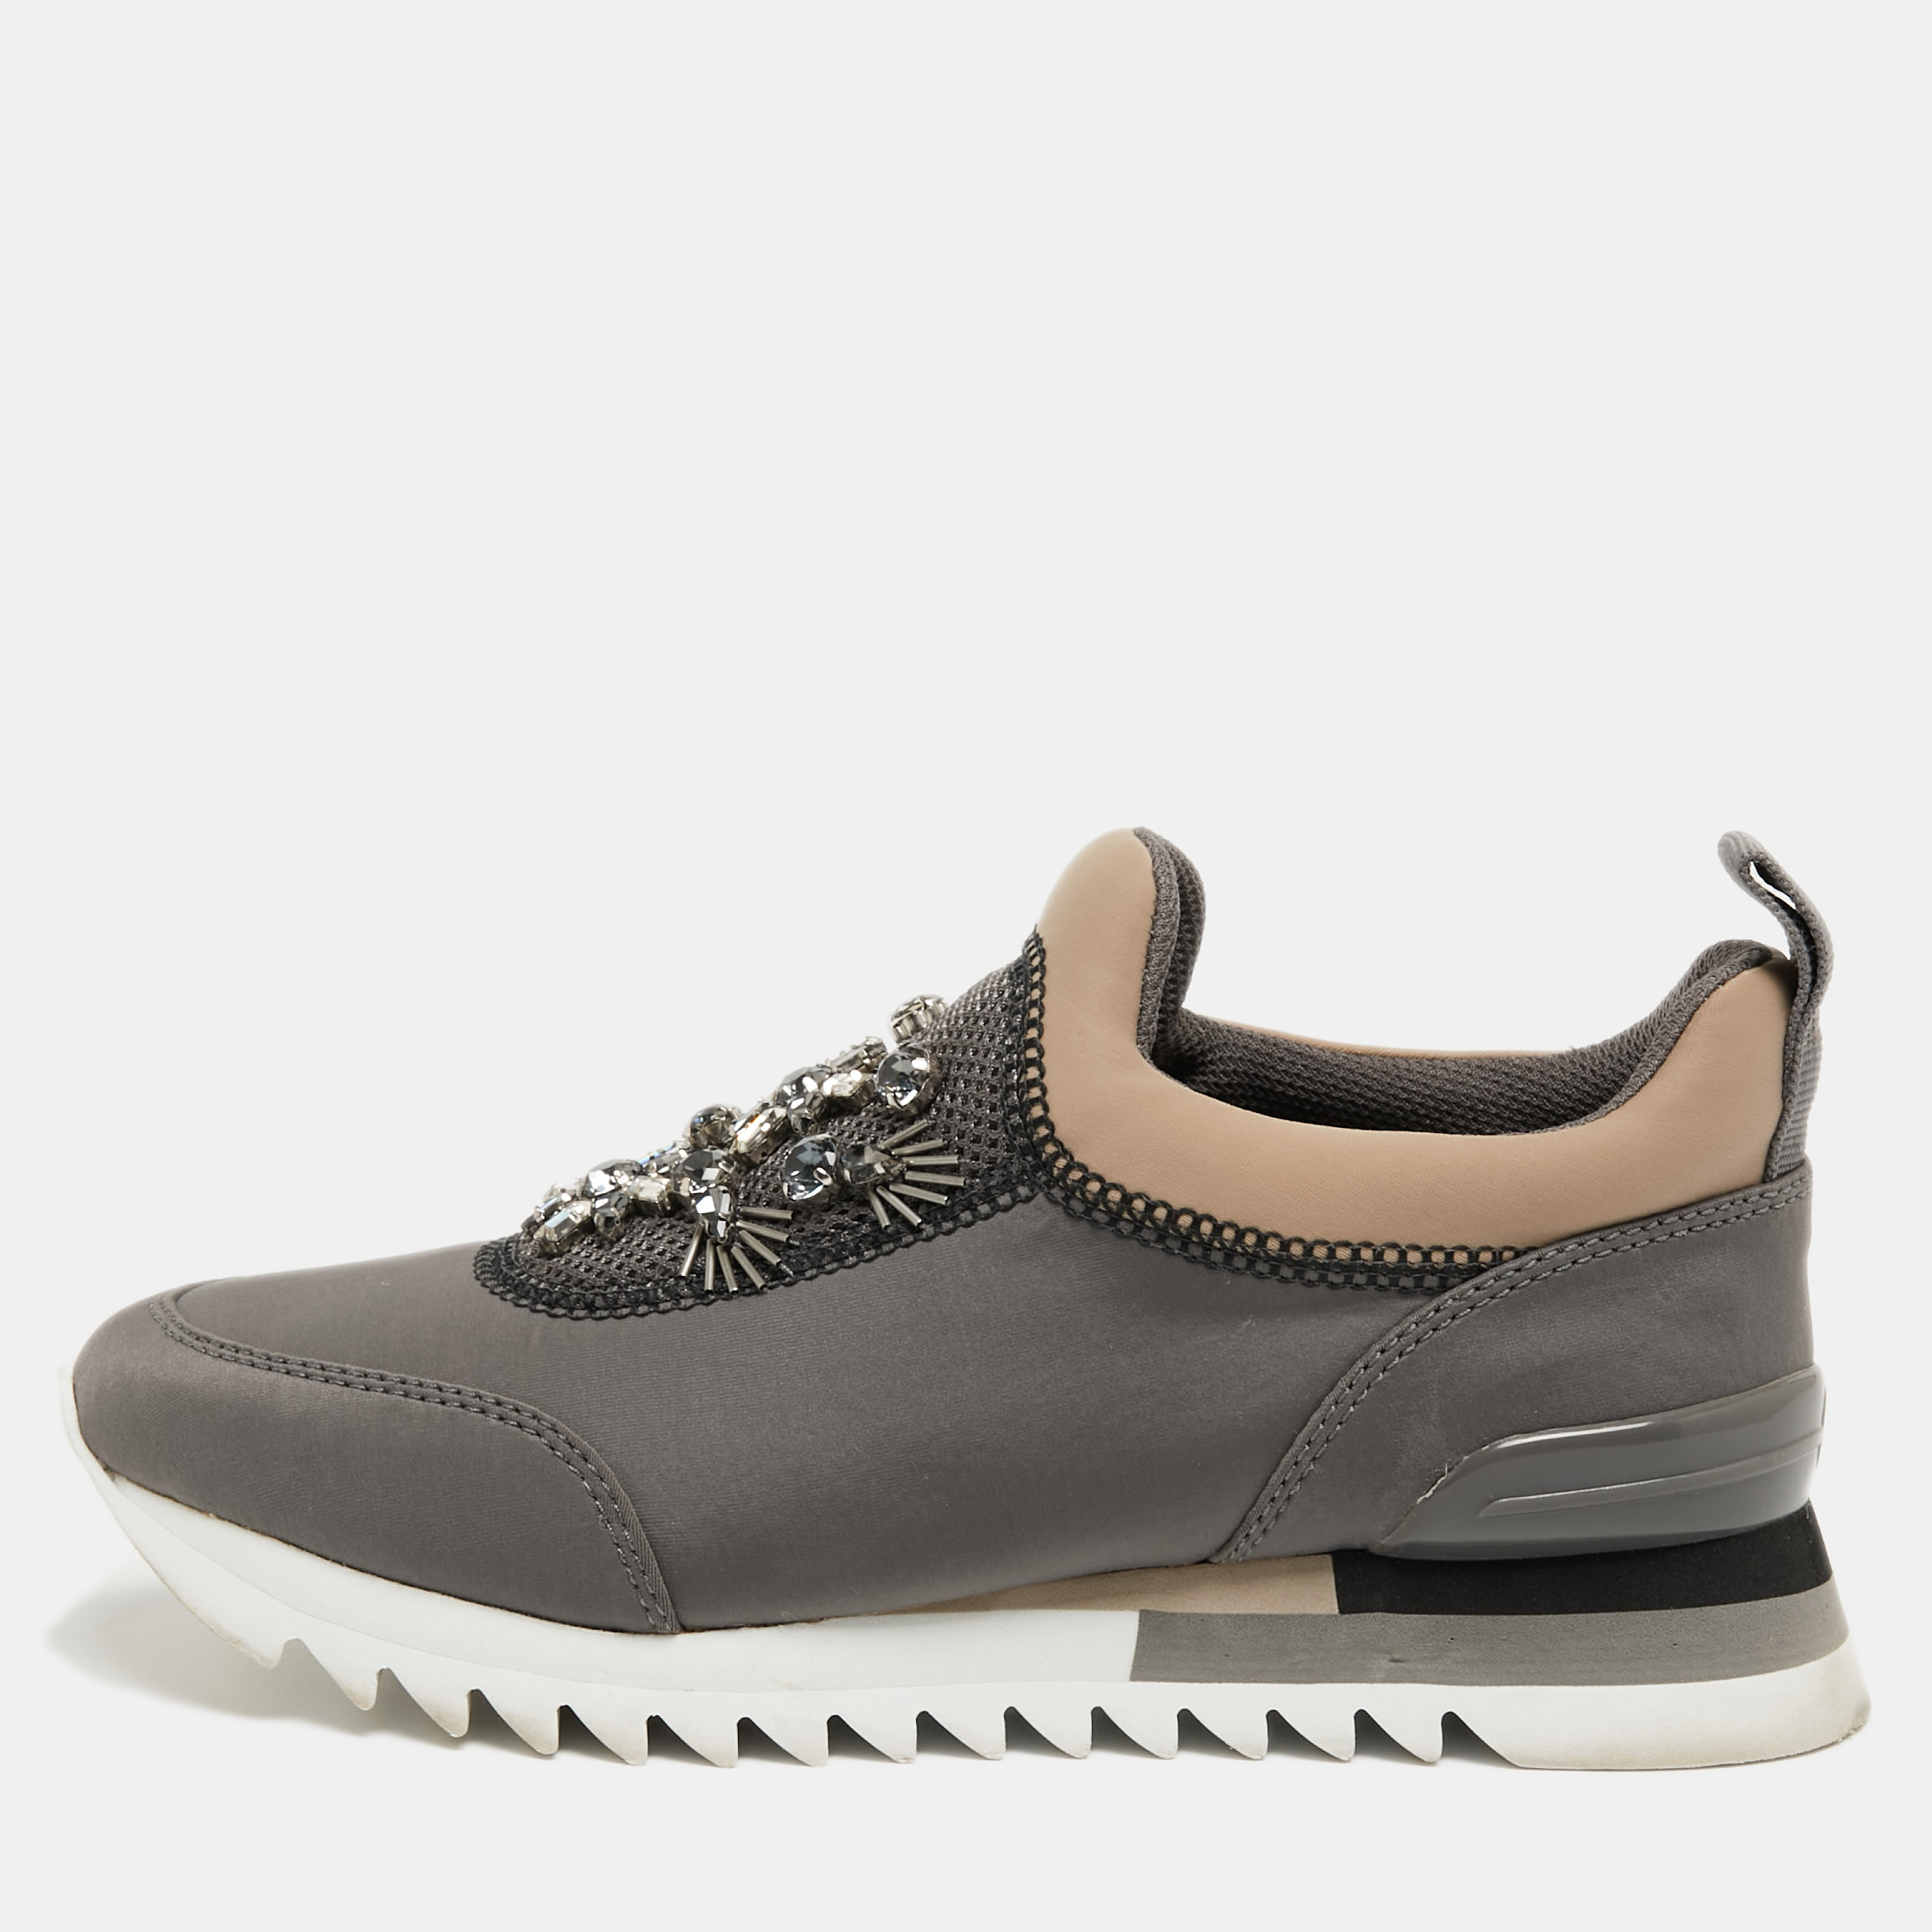 Tory Burch Grey/Beige Neoprene And Mesh Storm Cloud Crystal Embellished  Slip On Sneakers Size 38